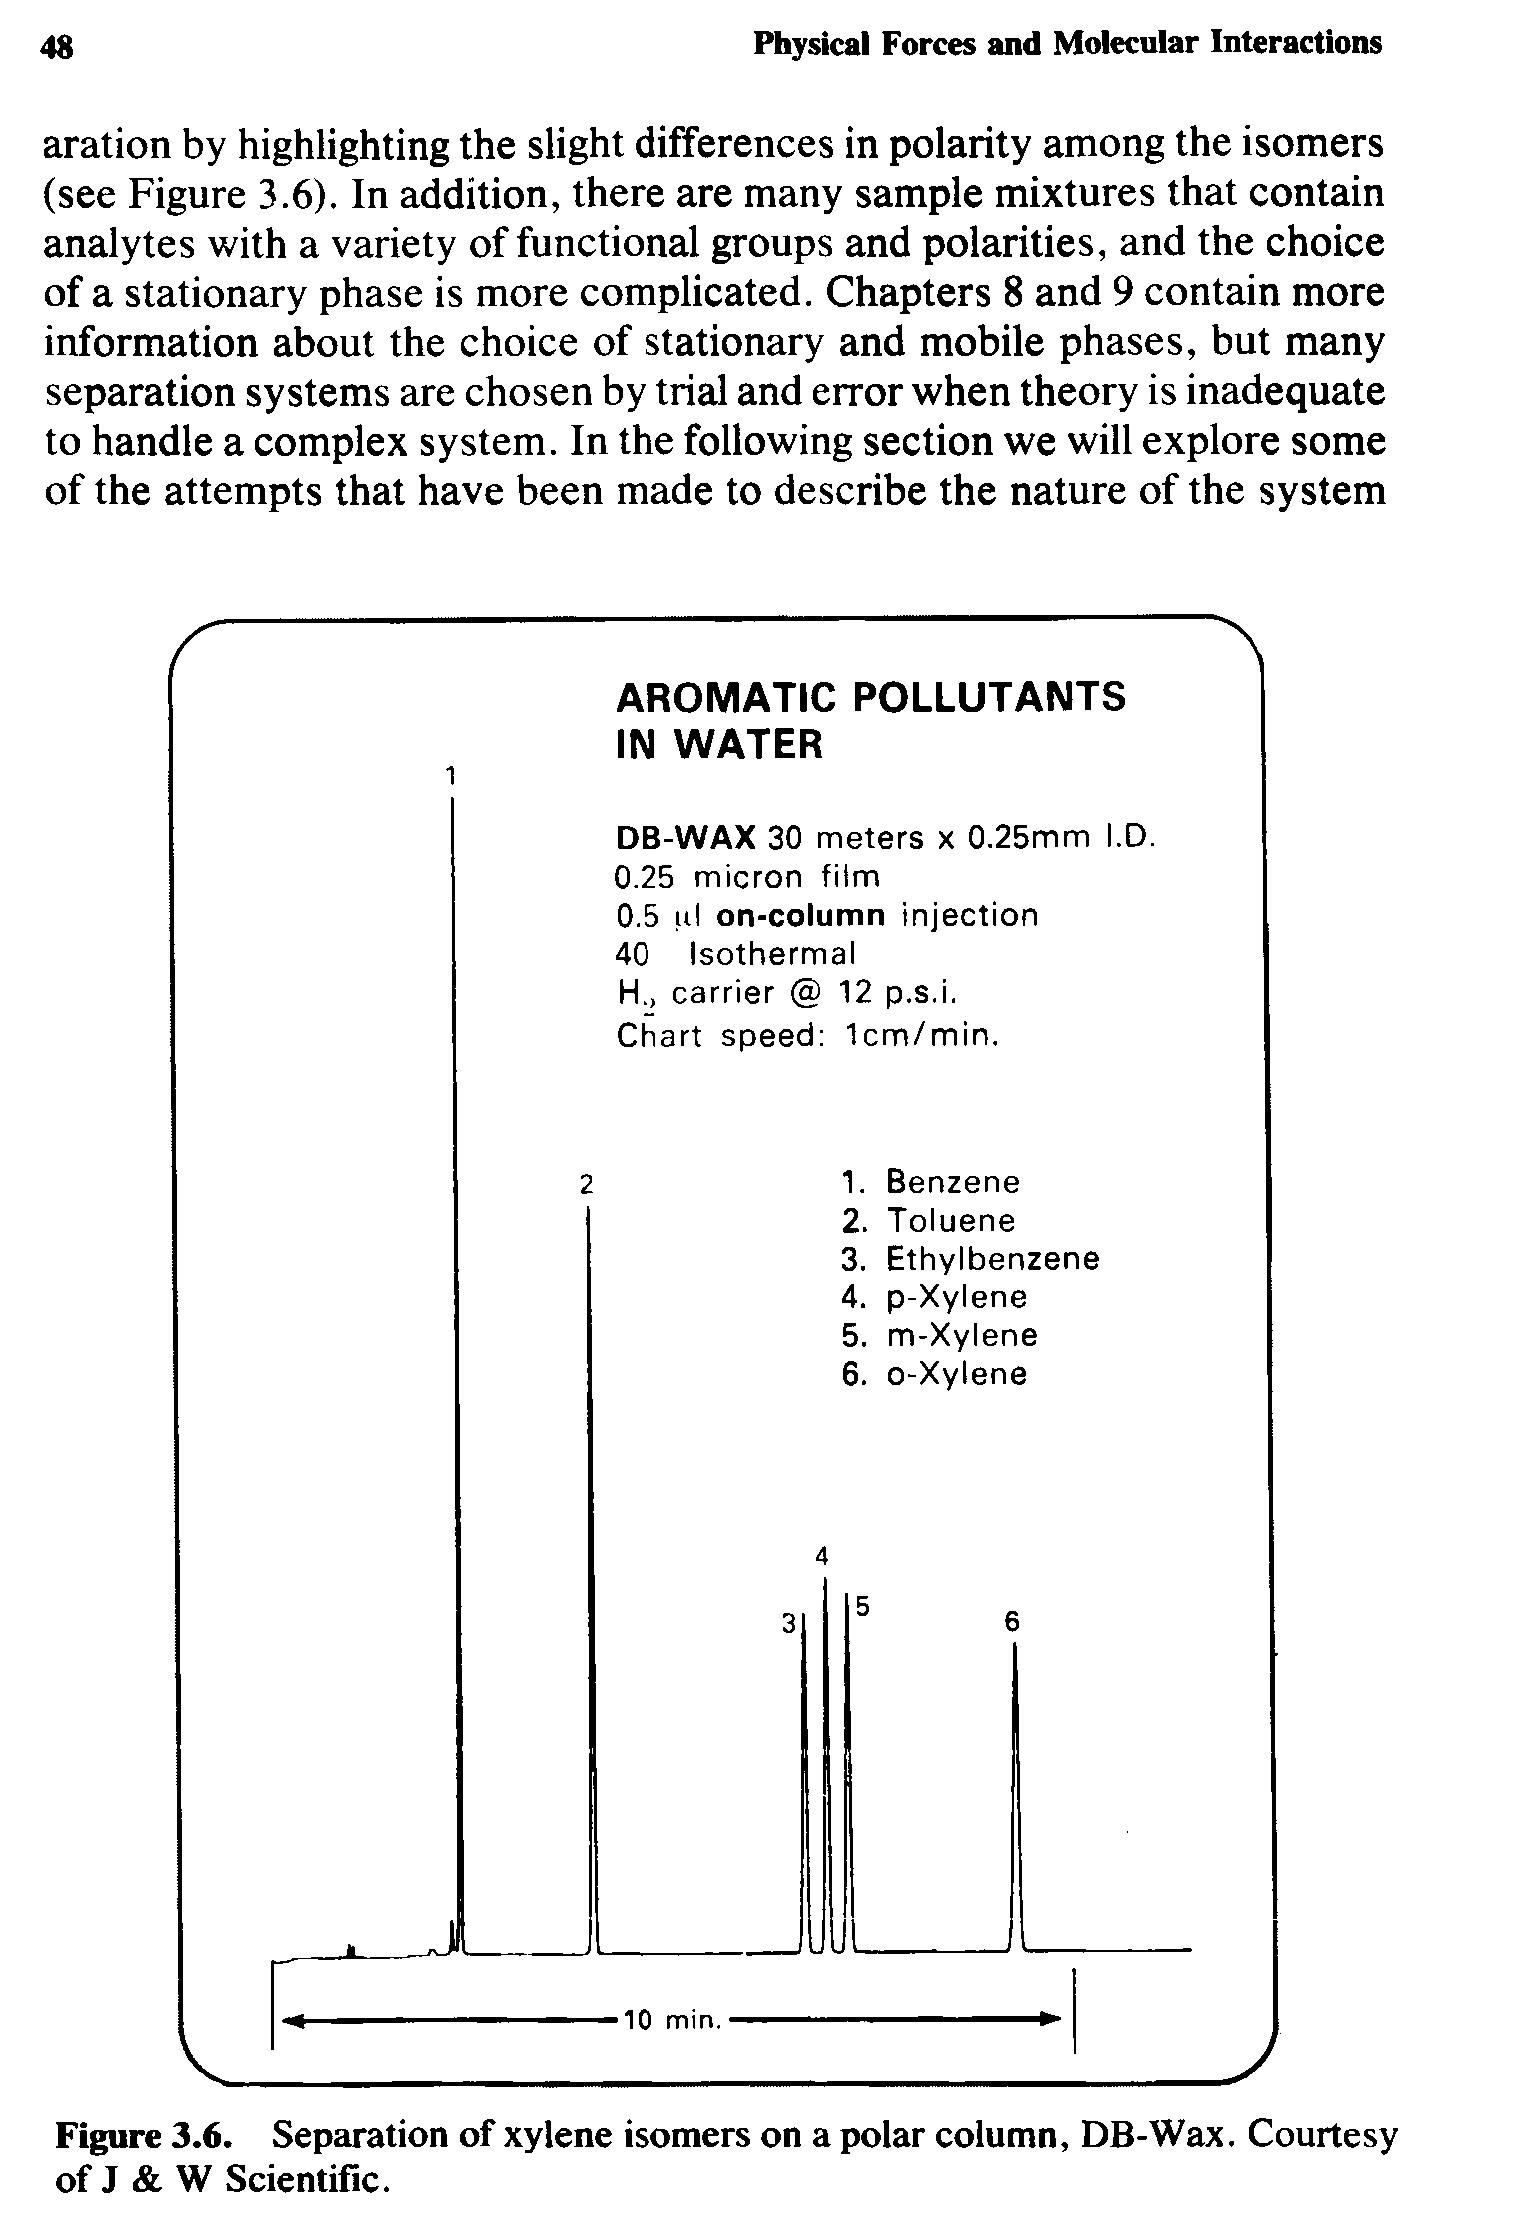 Figure 3.6. Separation of xylene isomers on a polar column, DB-Wax. Courtesy of J W Scientific.